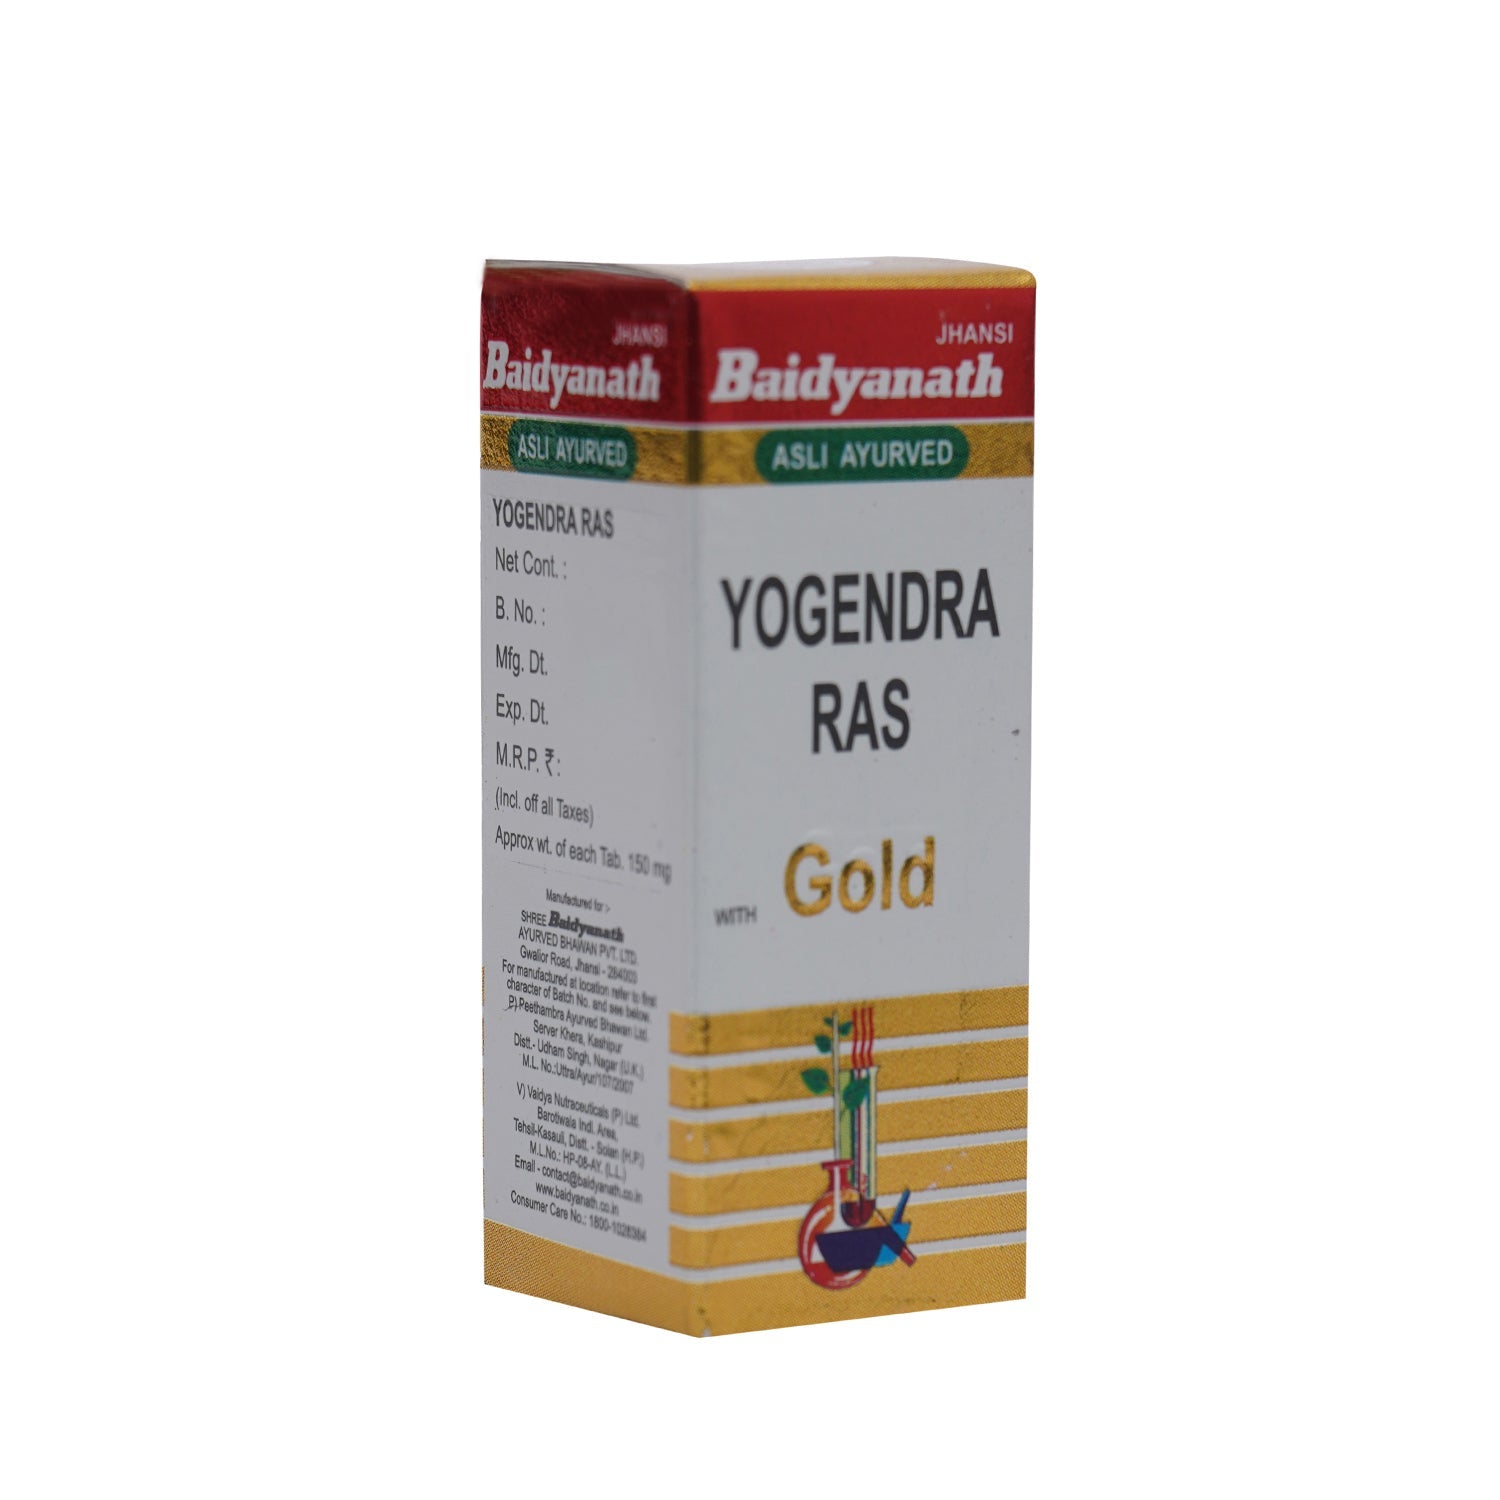 Baidyanath (Jhansi) Yogendra Ras with Gold